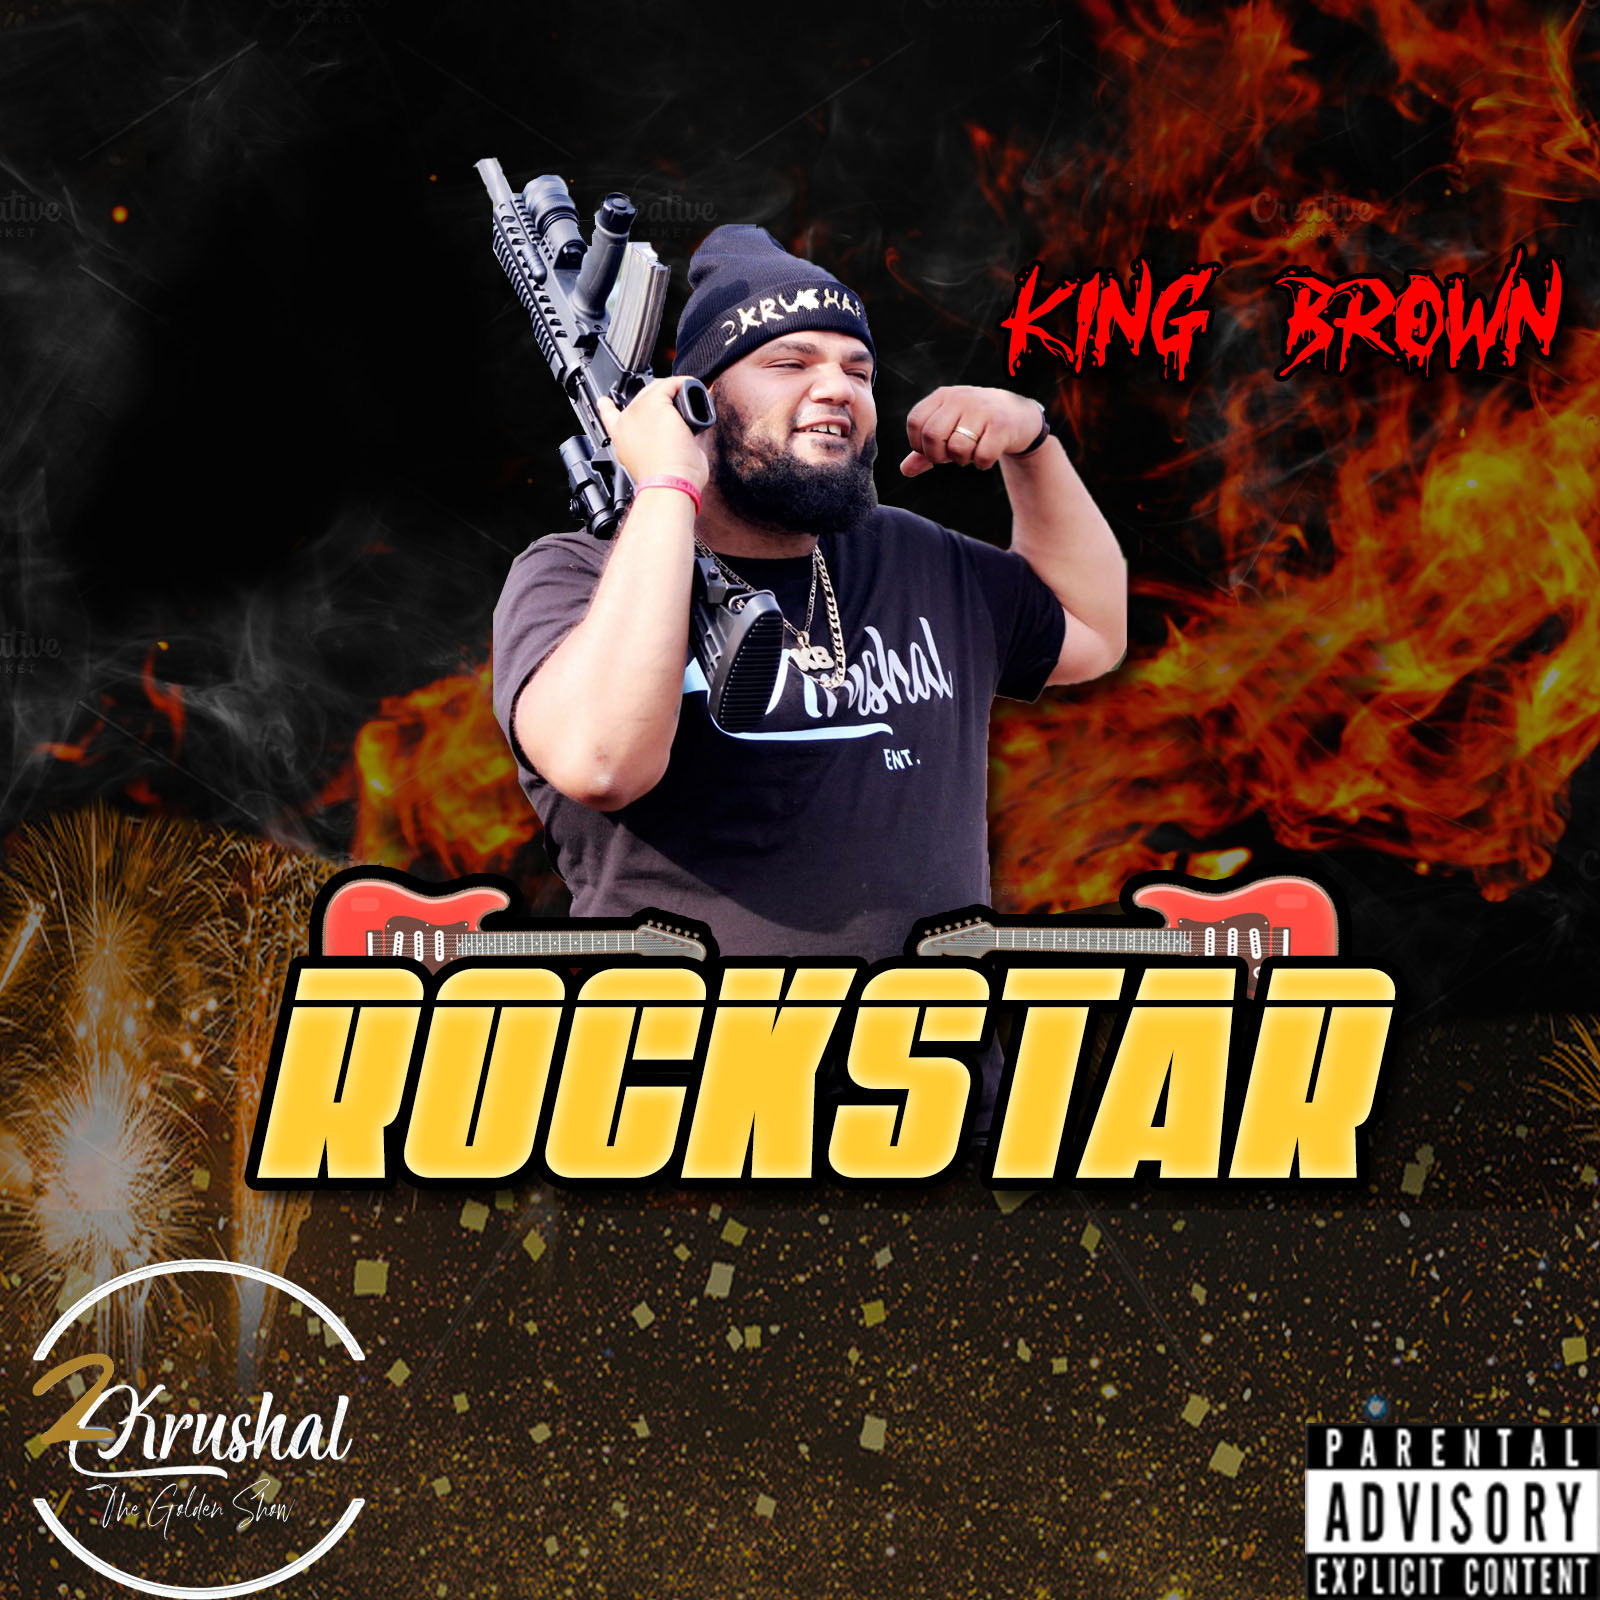 [Single] KingBrown ‘Rockstar’